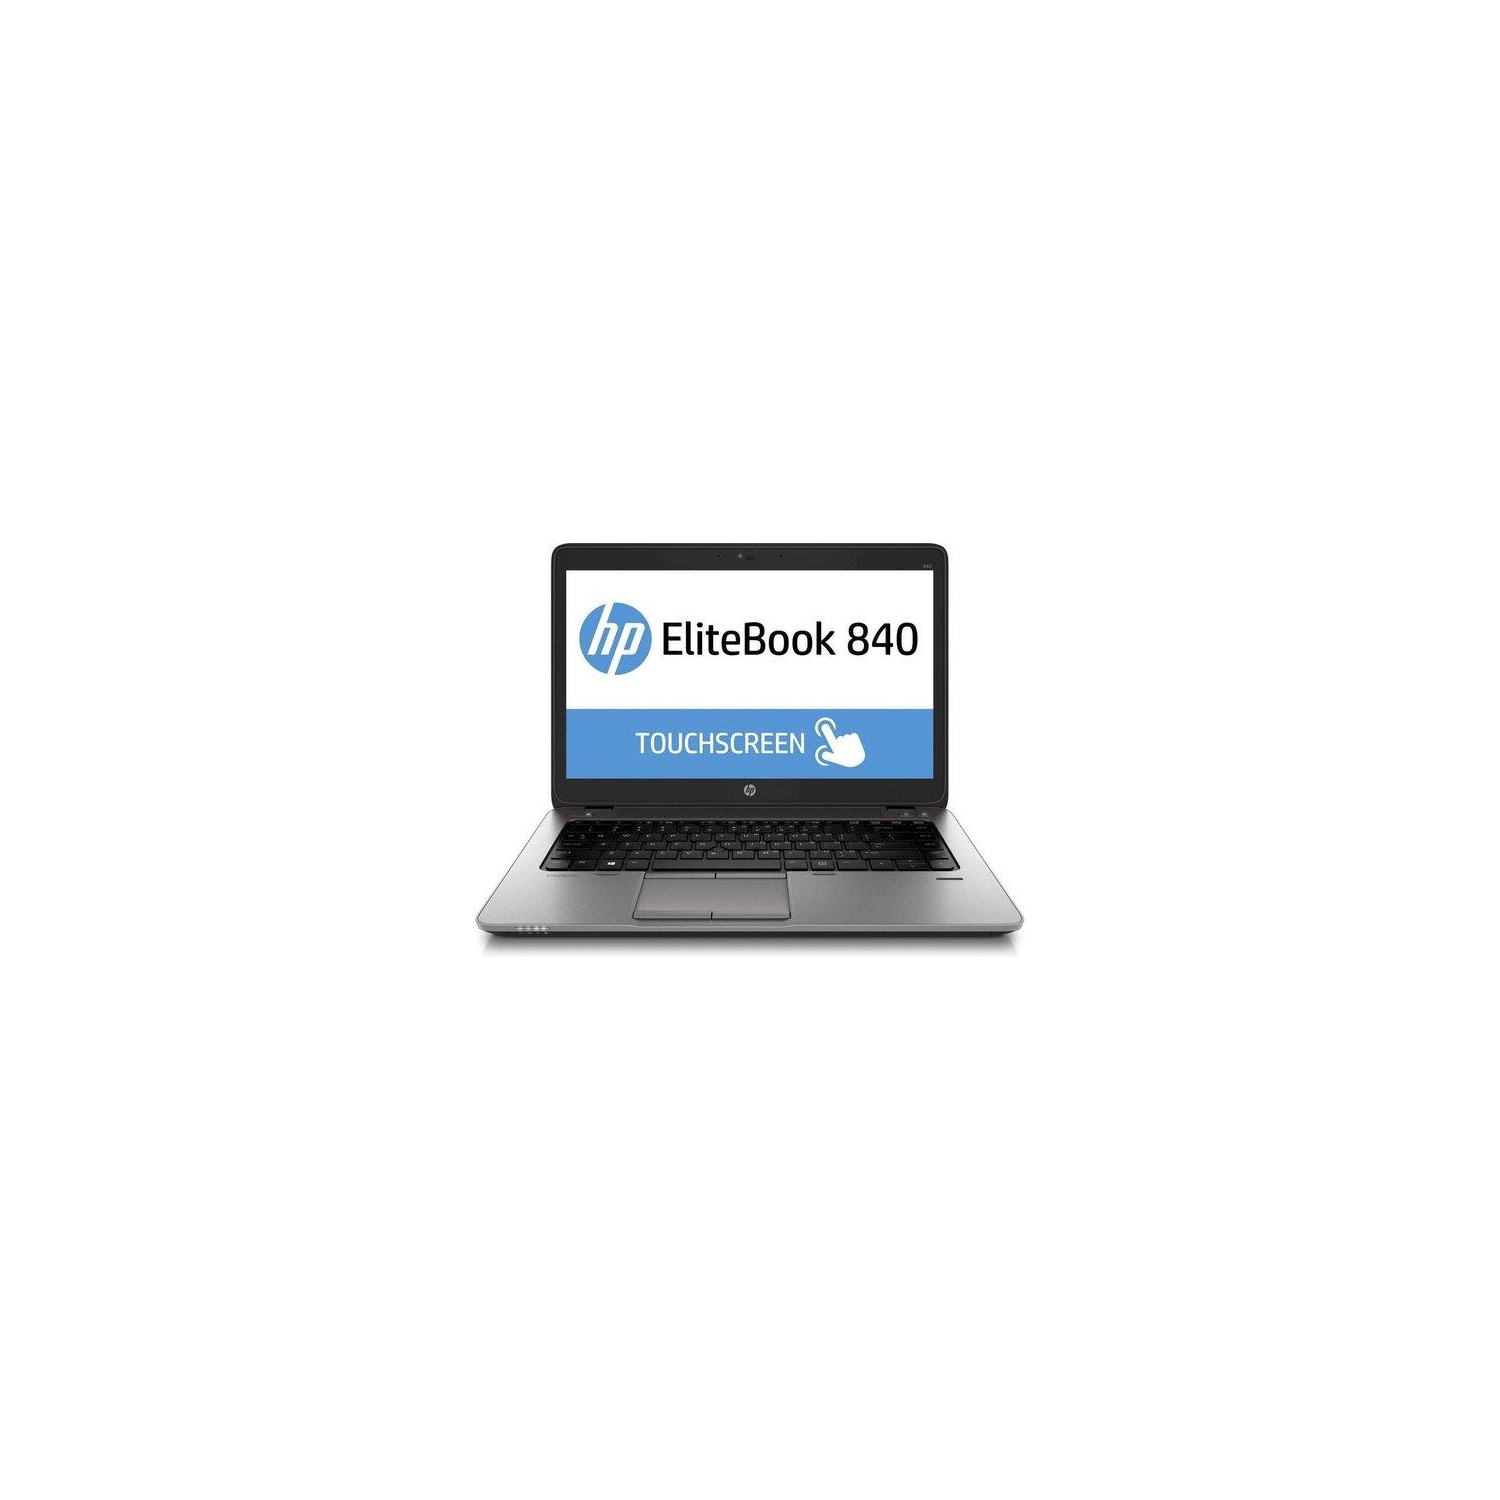 Refurbished (Good) - HP EliteBook 840 G3 14" FHD Touchscreen Business Laptop: i5-6200u 2.3GHz; 8G RAM; 180G SSD; Webcam; Backlit Keyboard, Win10 pro "â€œ